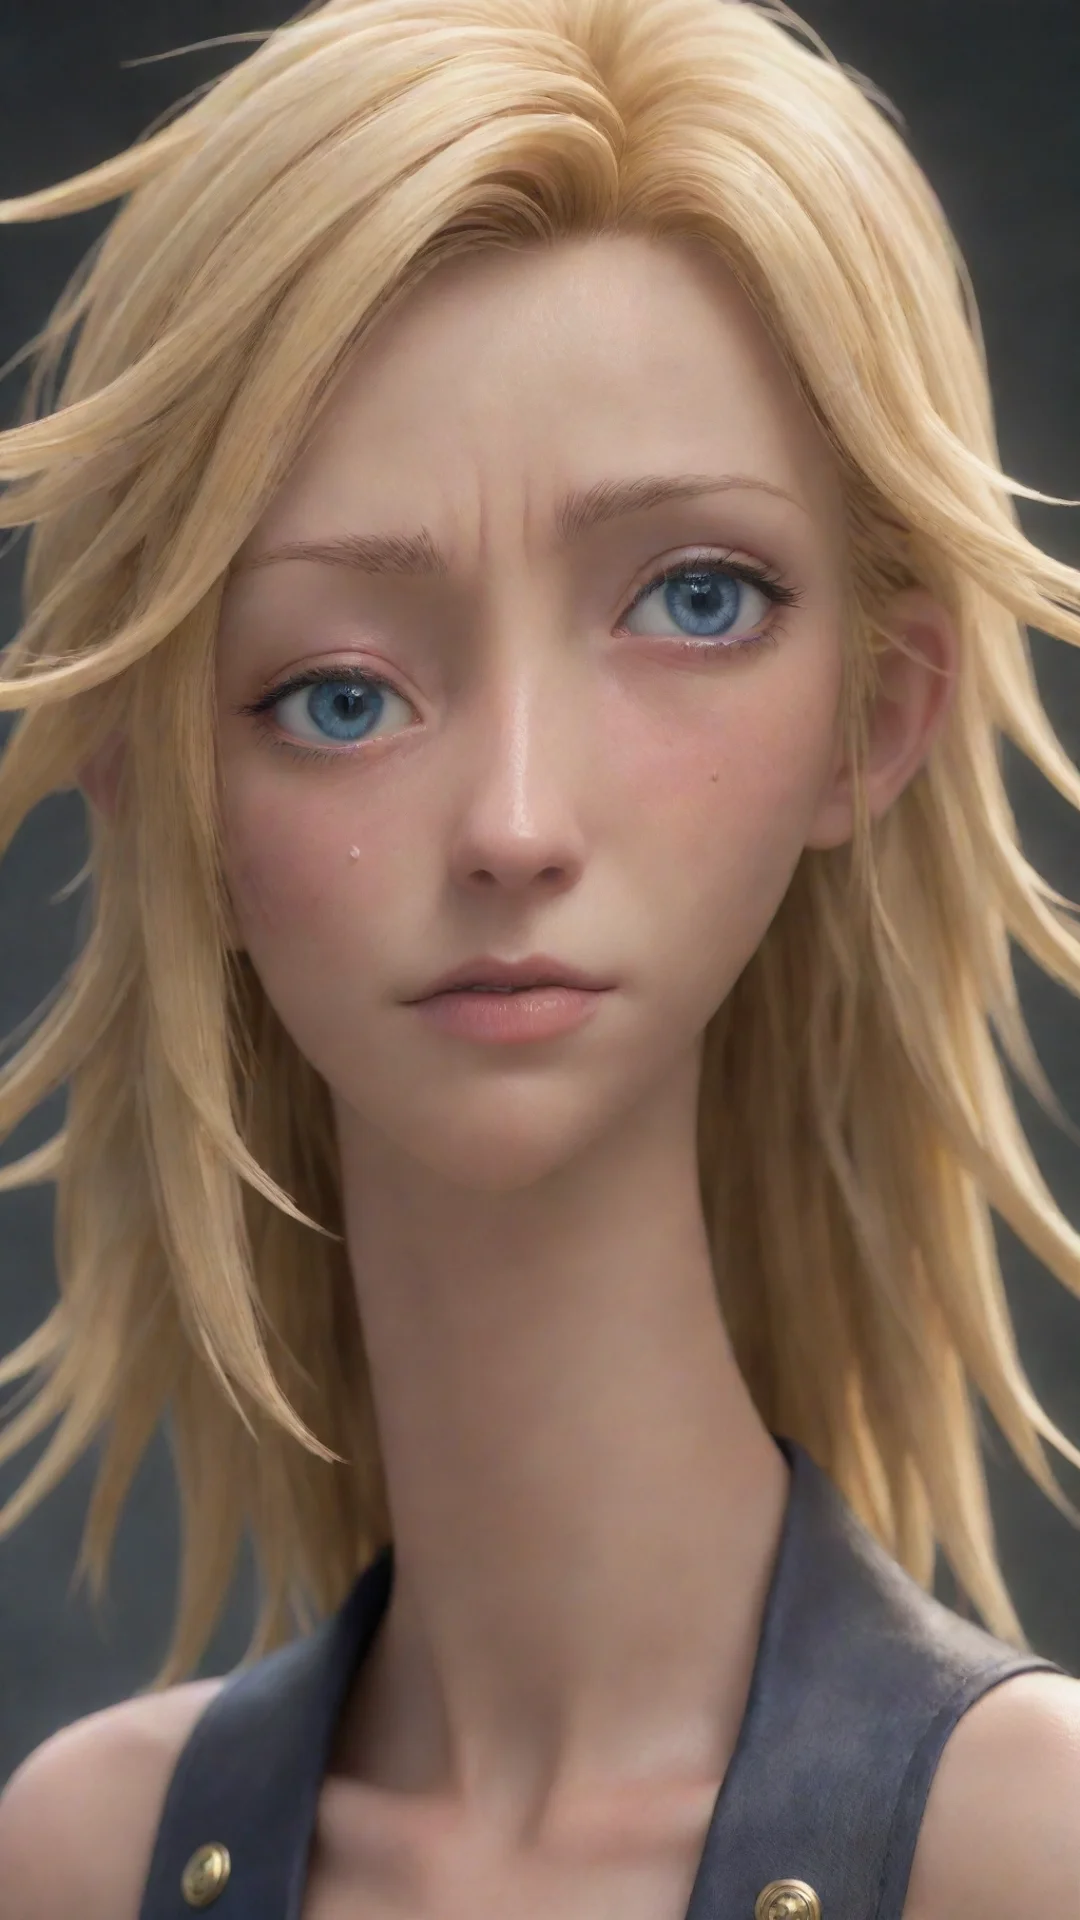 amazing portrait of crying public amano5 final fantasy2 artstation pixar render ar 916 awesome portrait 2 tall